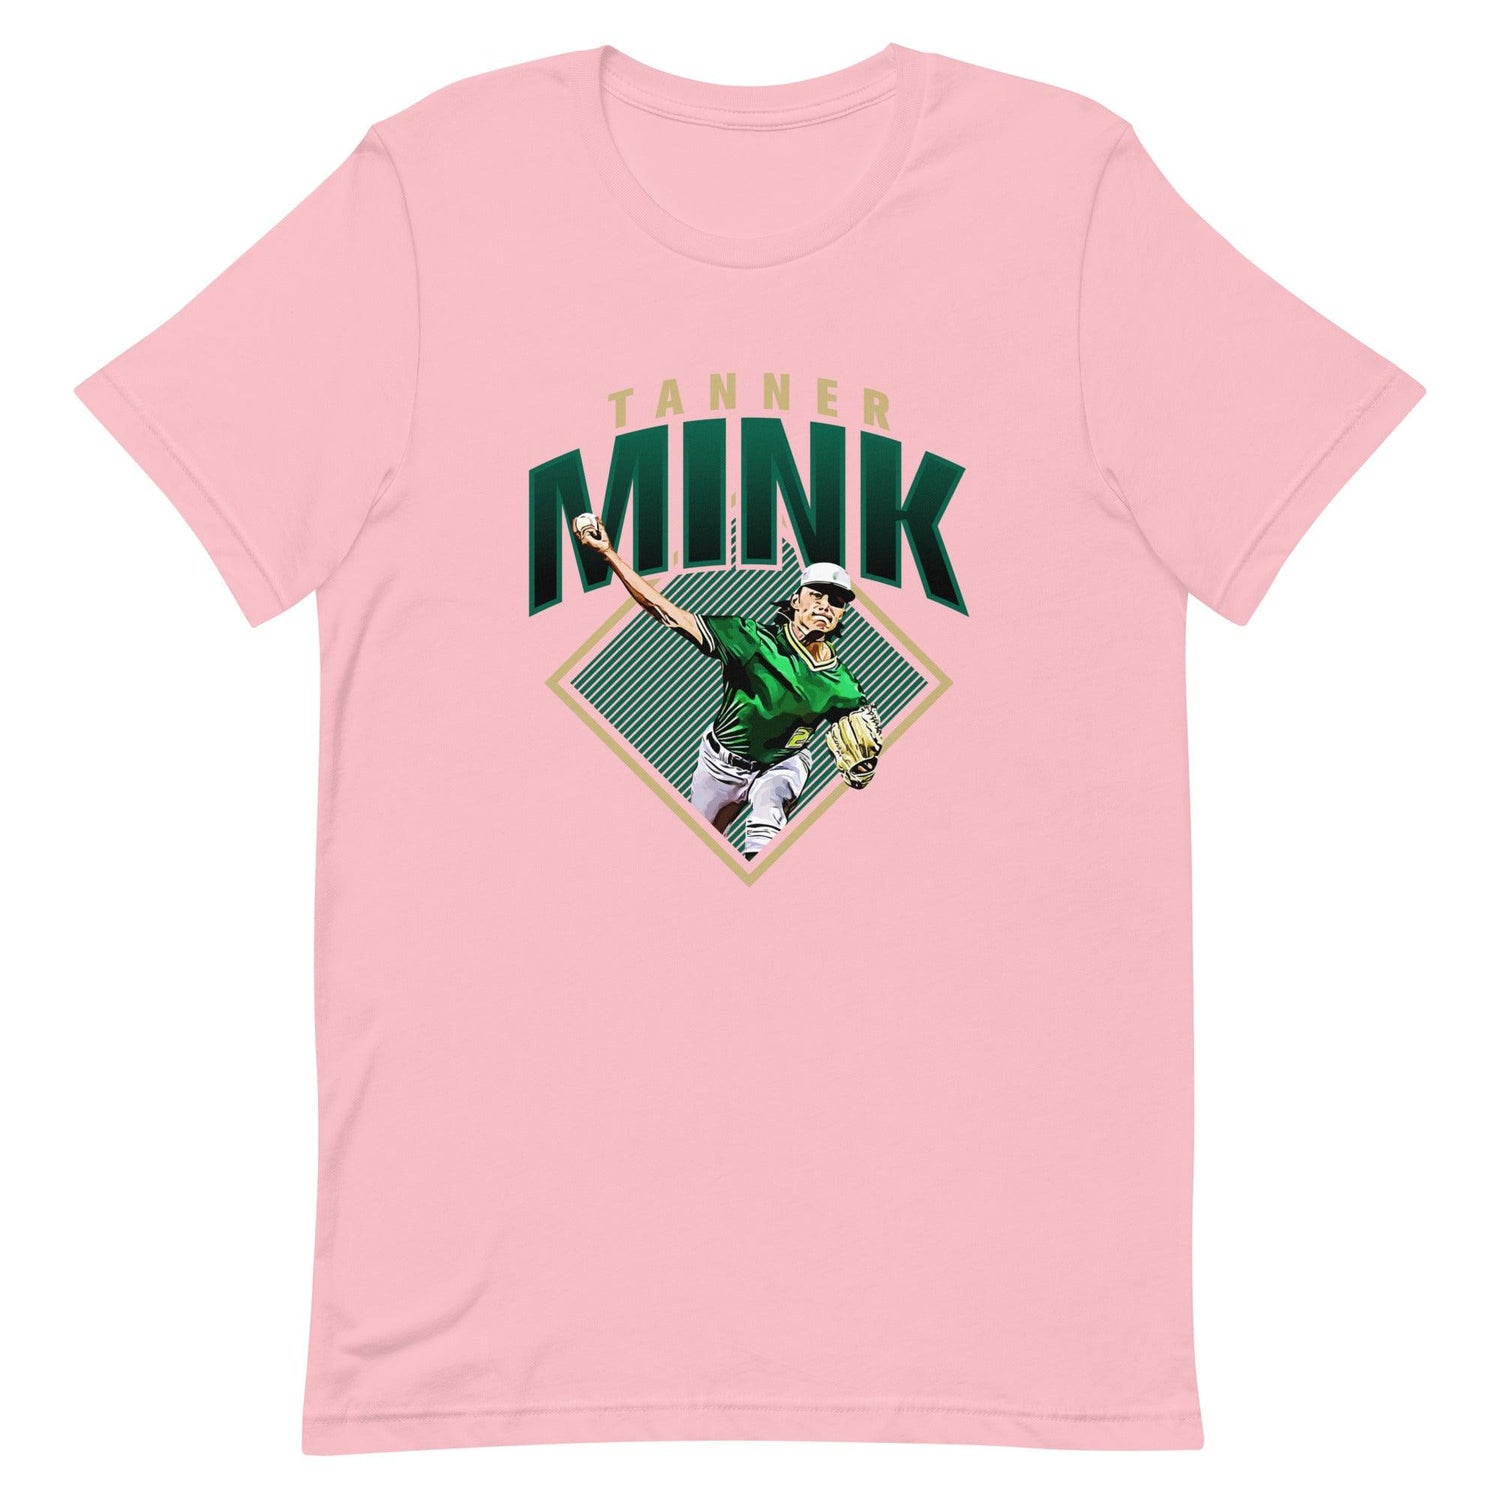 Tanner Mink "Gameday" t-shirt - Fan Arch